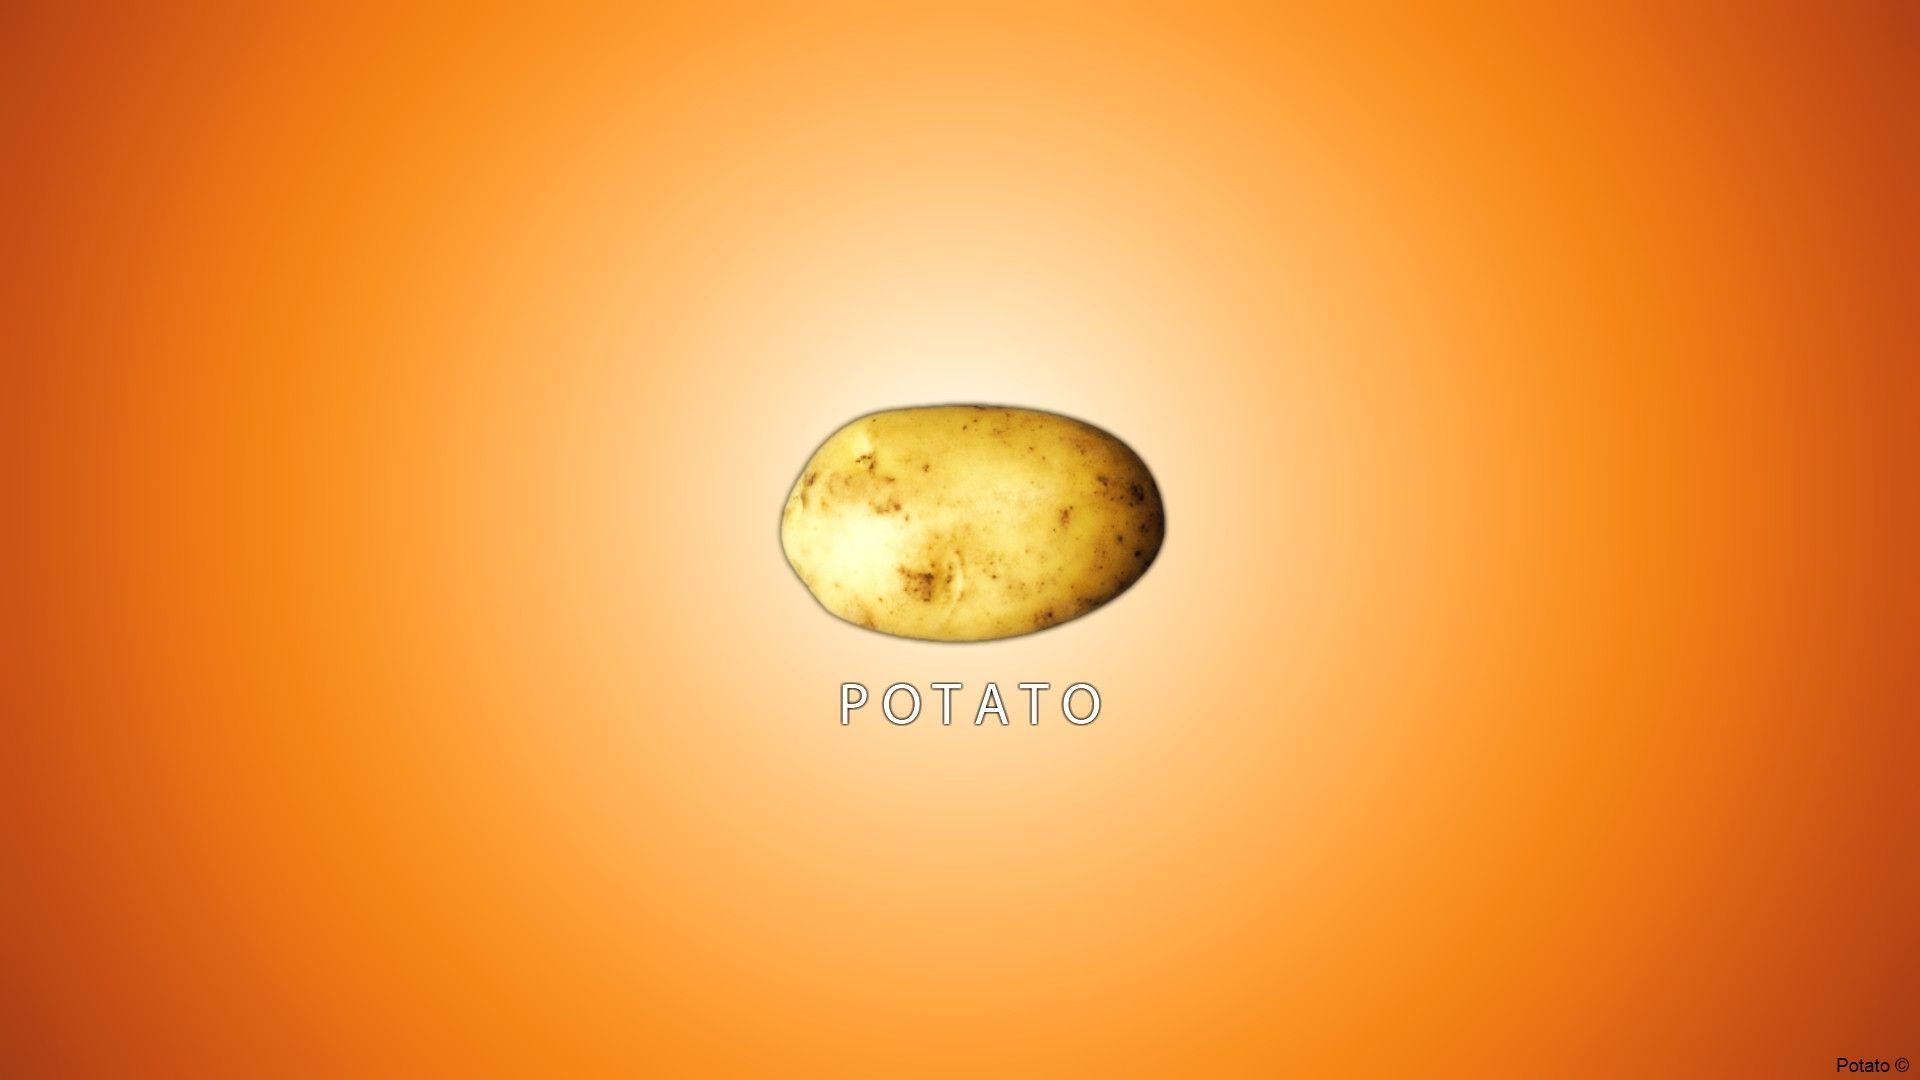 Potato [1920x1080] [x Post R Potato]